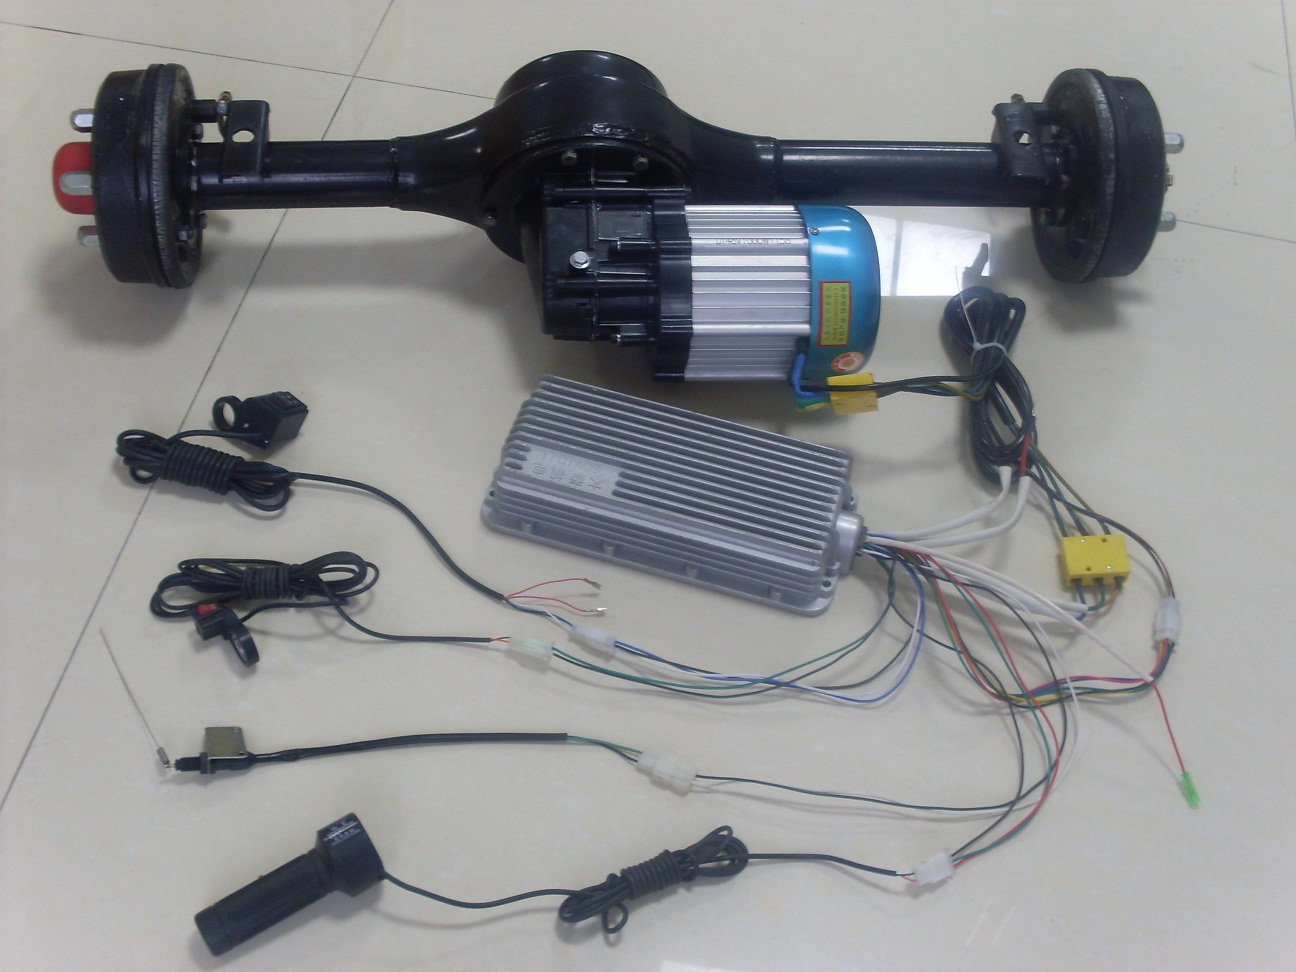 48v 1500w bldc motor kit